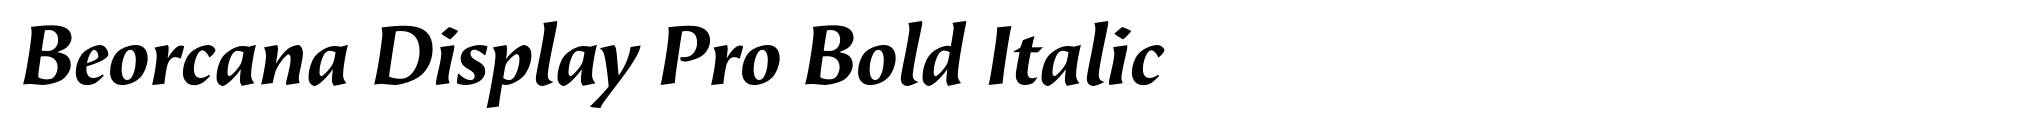 Beorcana Display Pro Bold Italic image